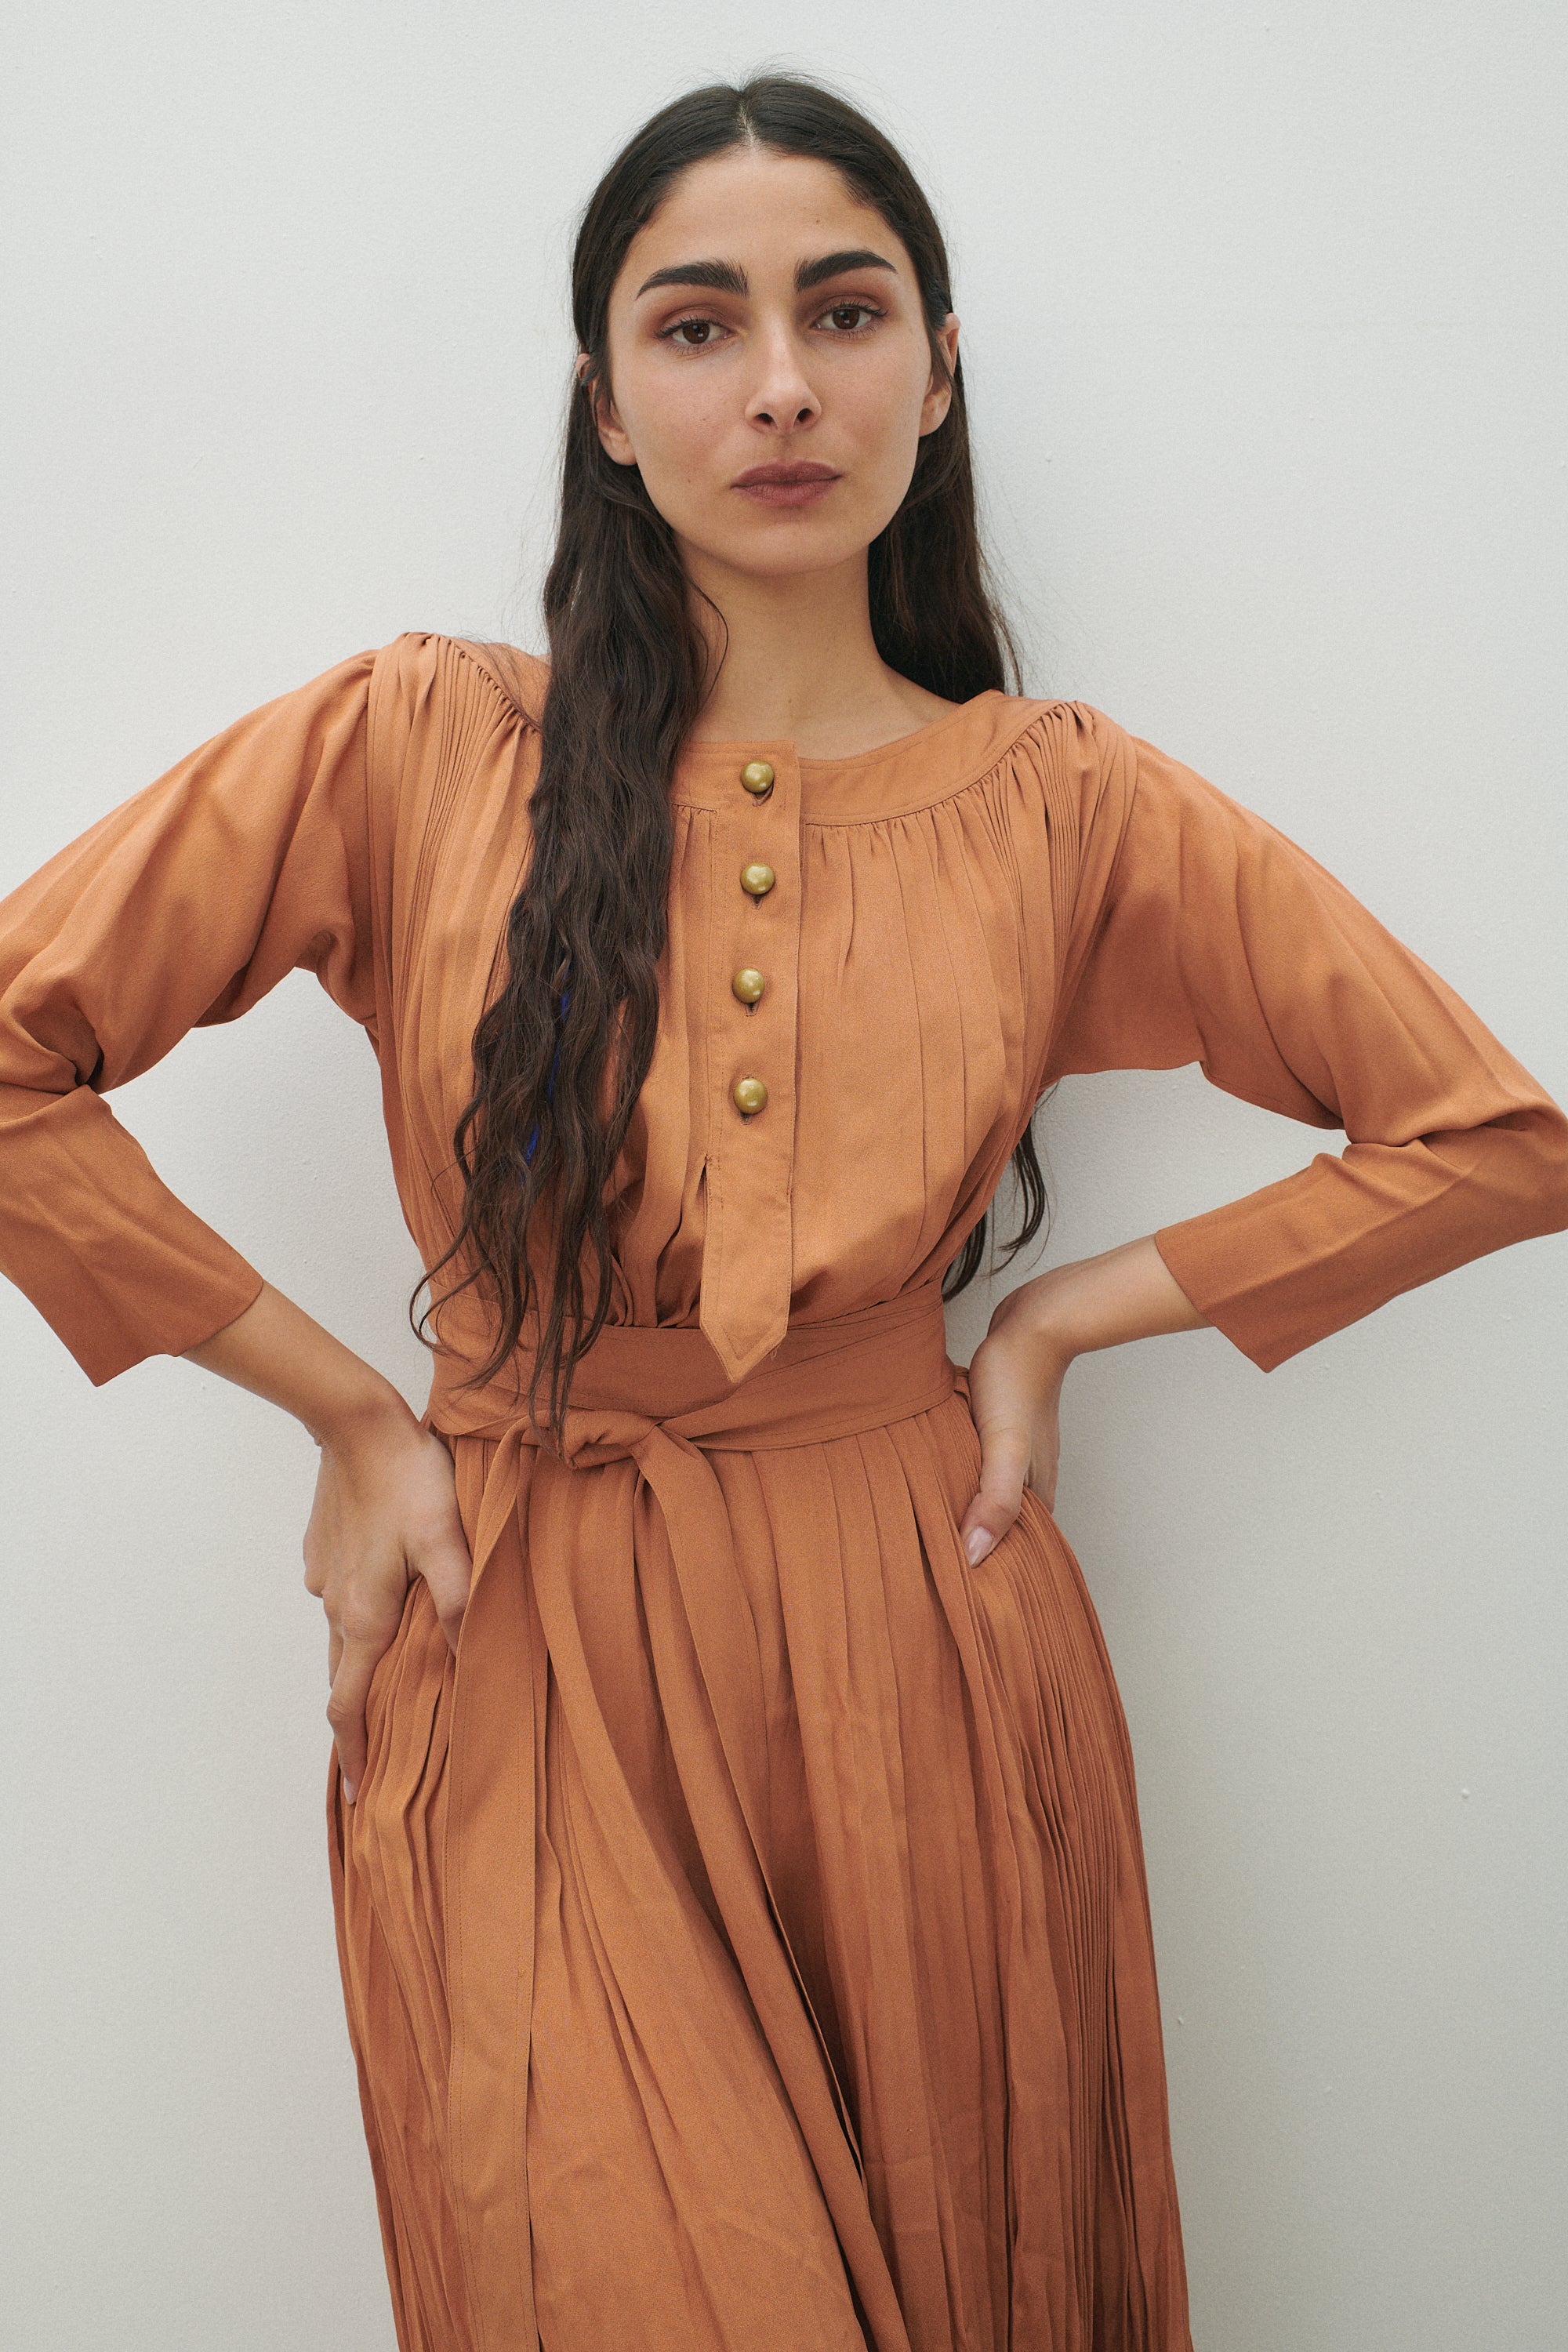 Claire McCardell Orange Pleated Dress - Desert Vintage